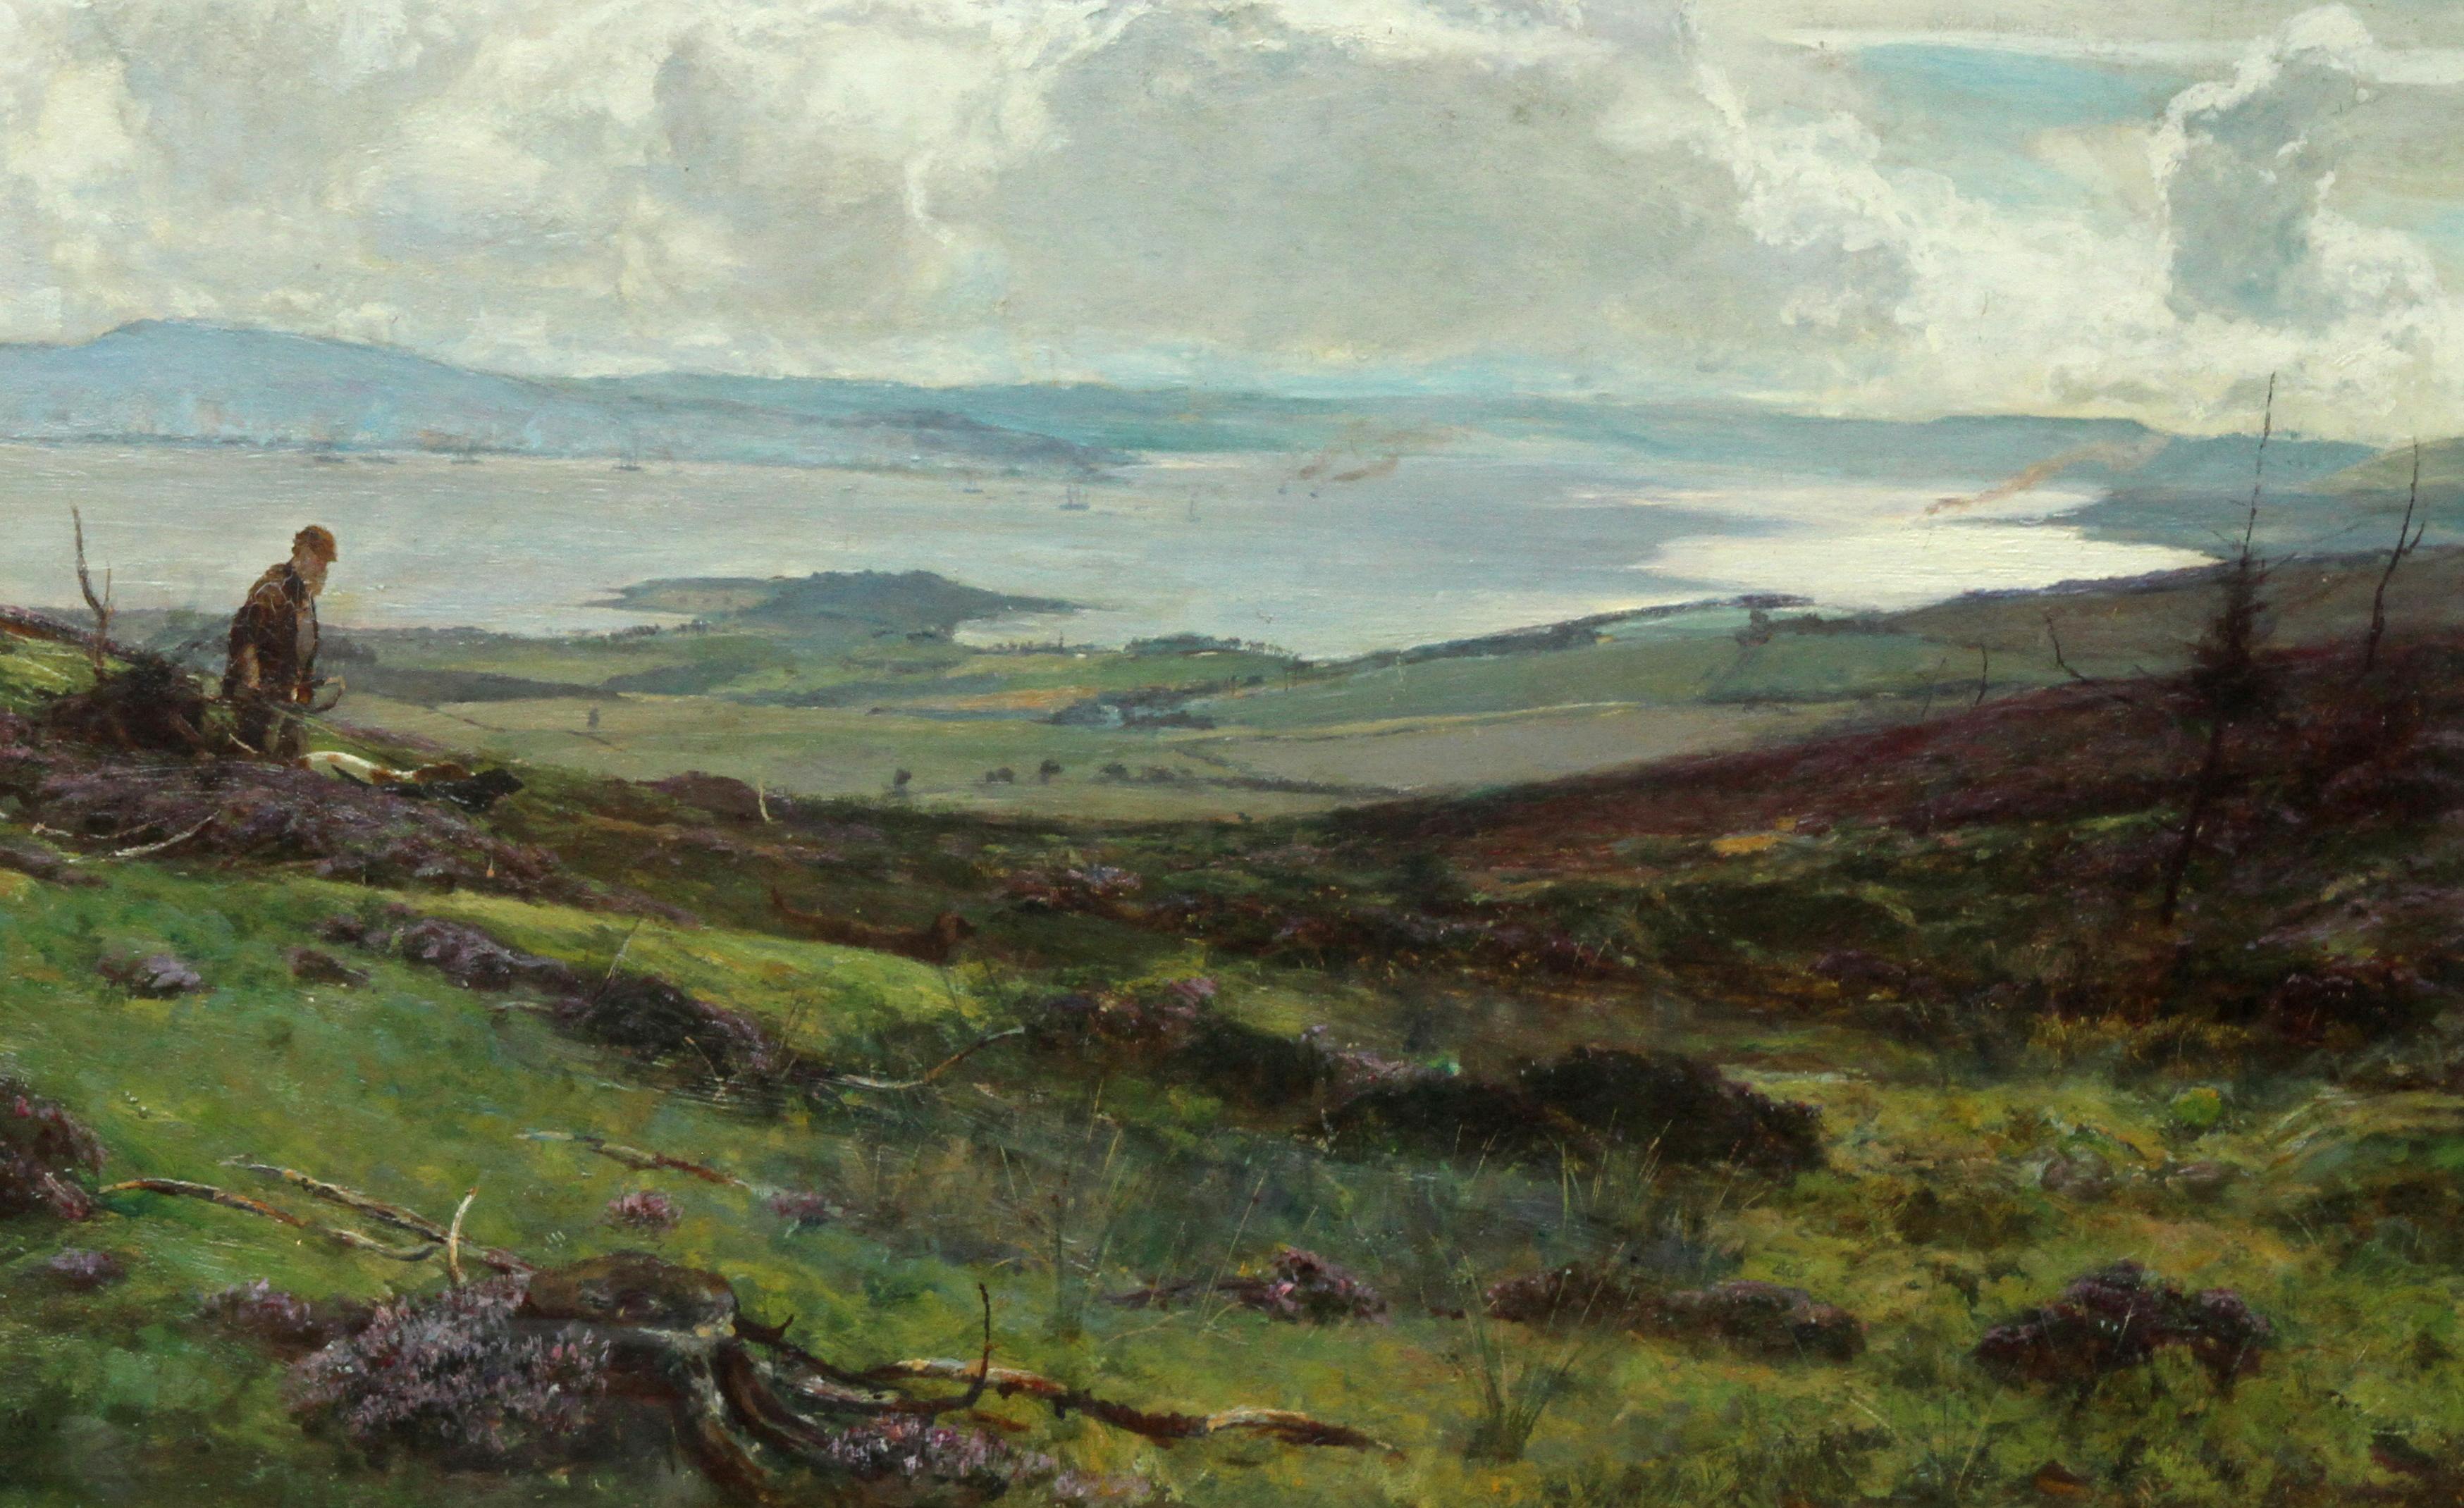 The Clyde from Darleith Moor über Cardross – schottische viktorianische Kunst (Realismus), Painting, von Sir David Murray